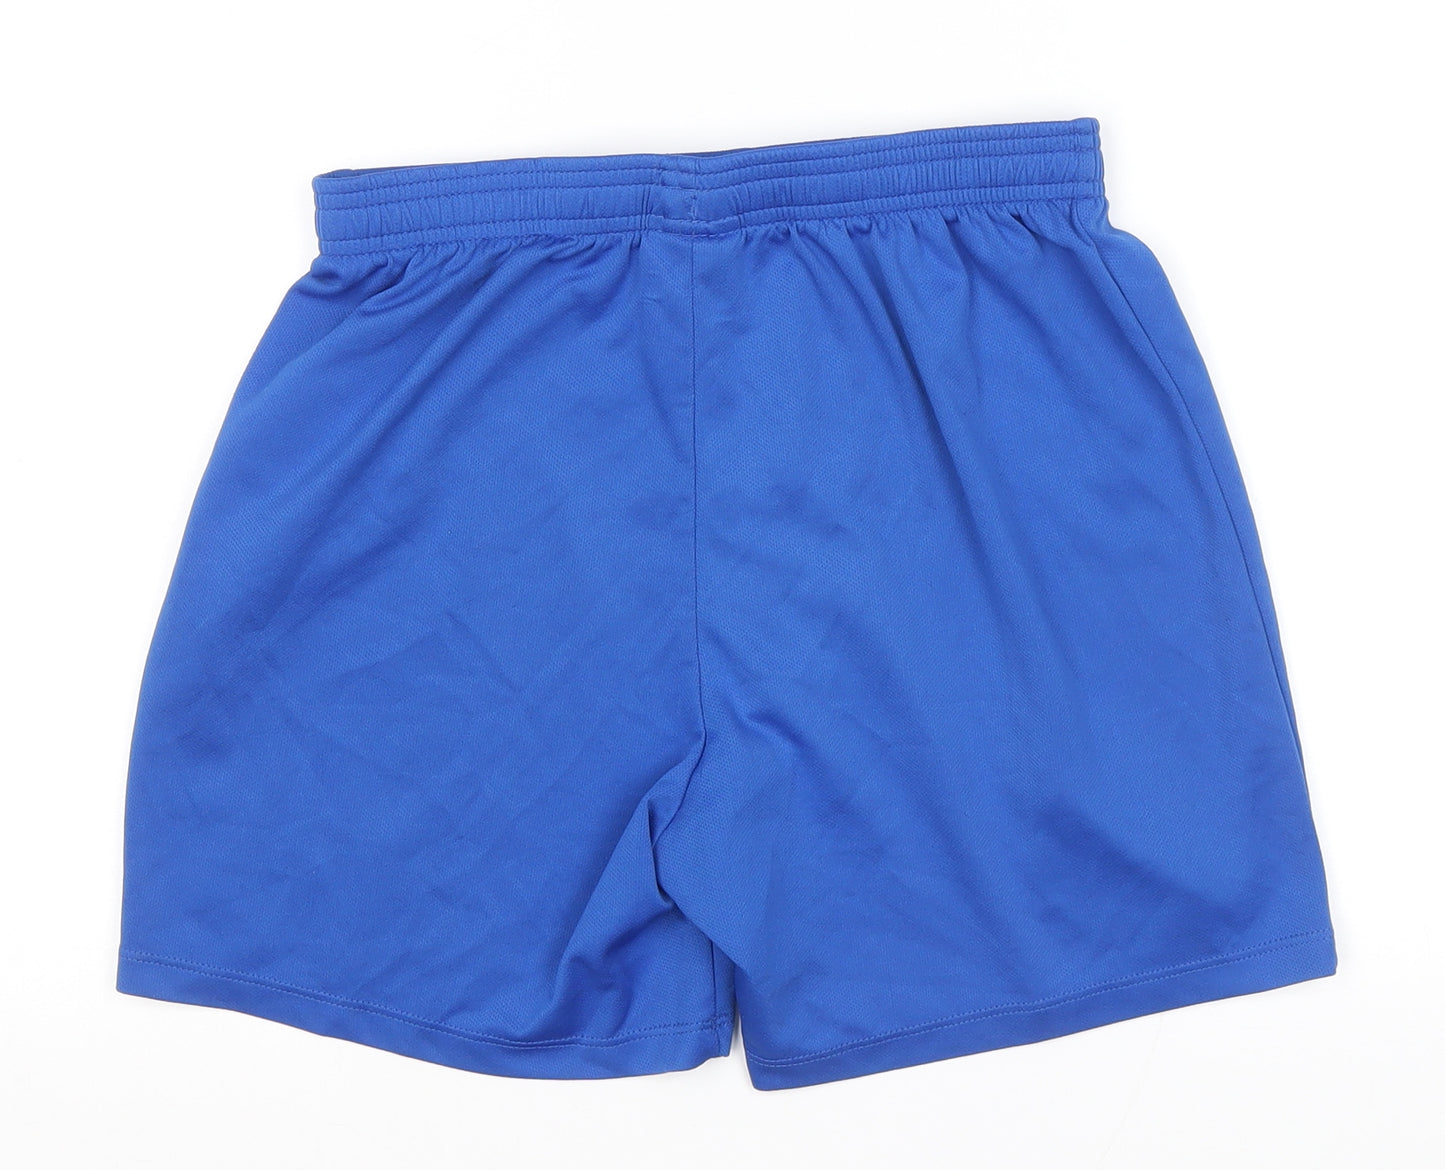 Umbro Mens Blue Polyester Sweat Shorts Size S Athletic Drawstring - Bangor FC